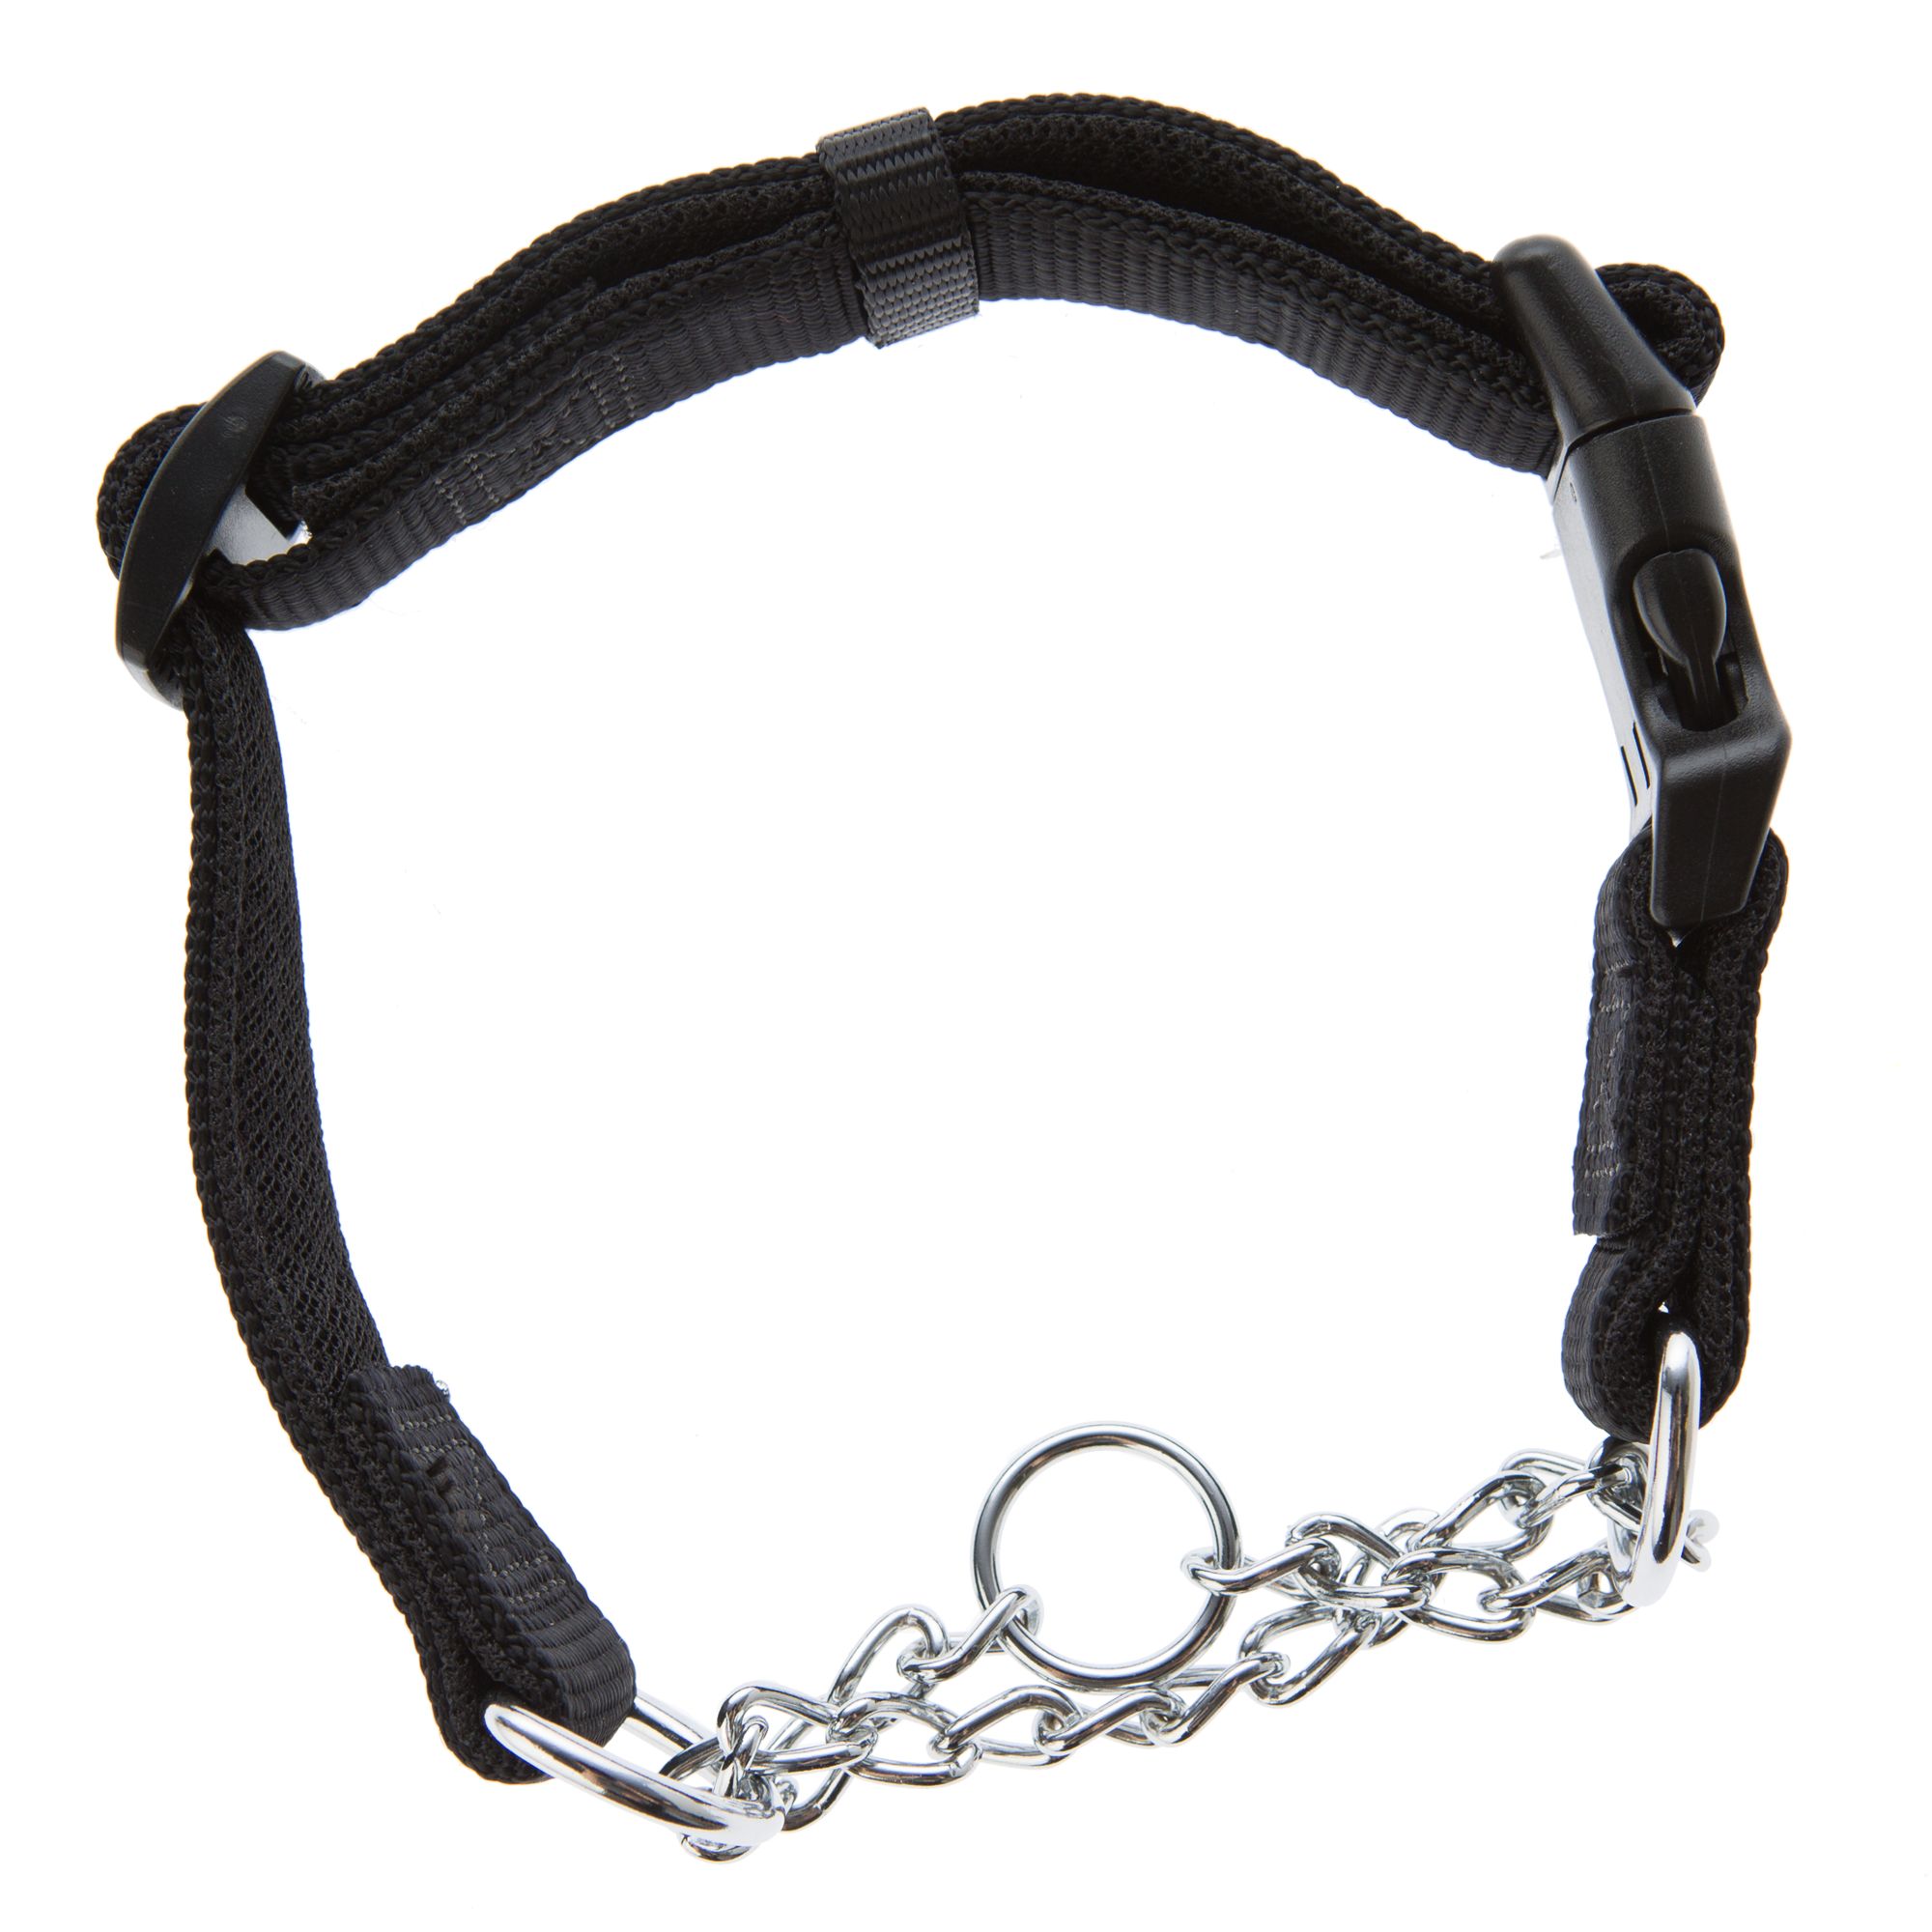 black chain collar